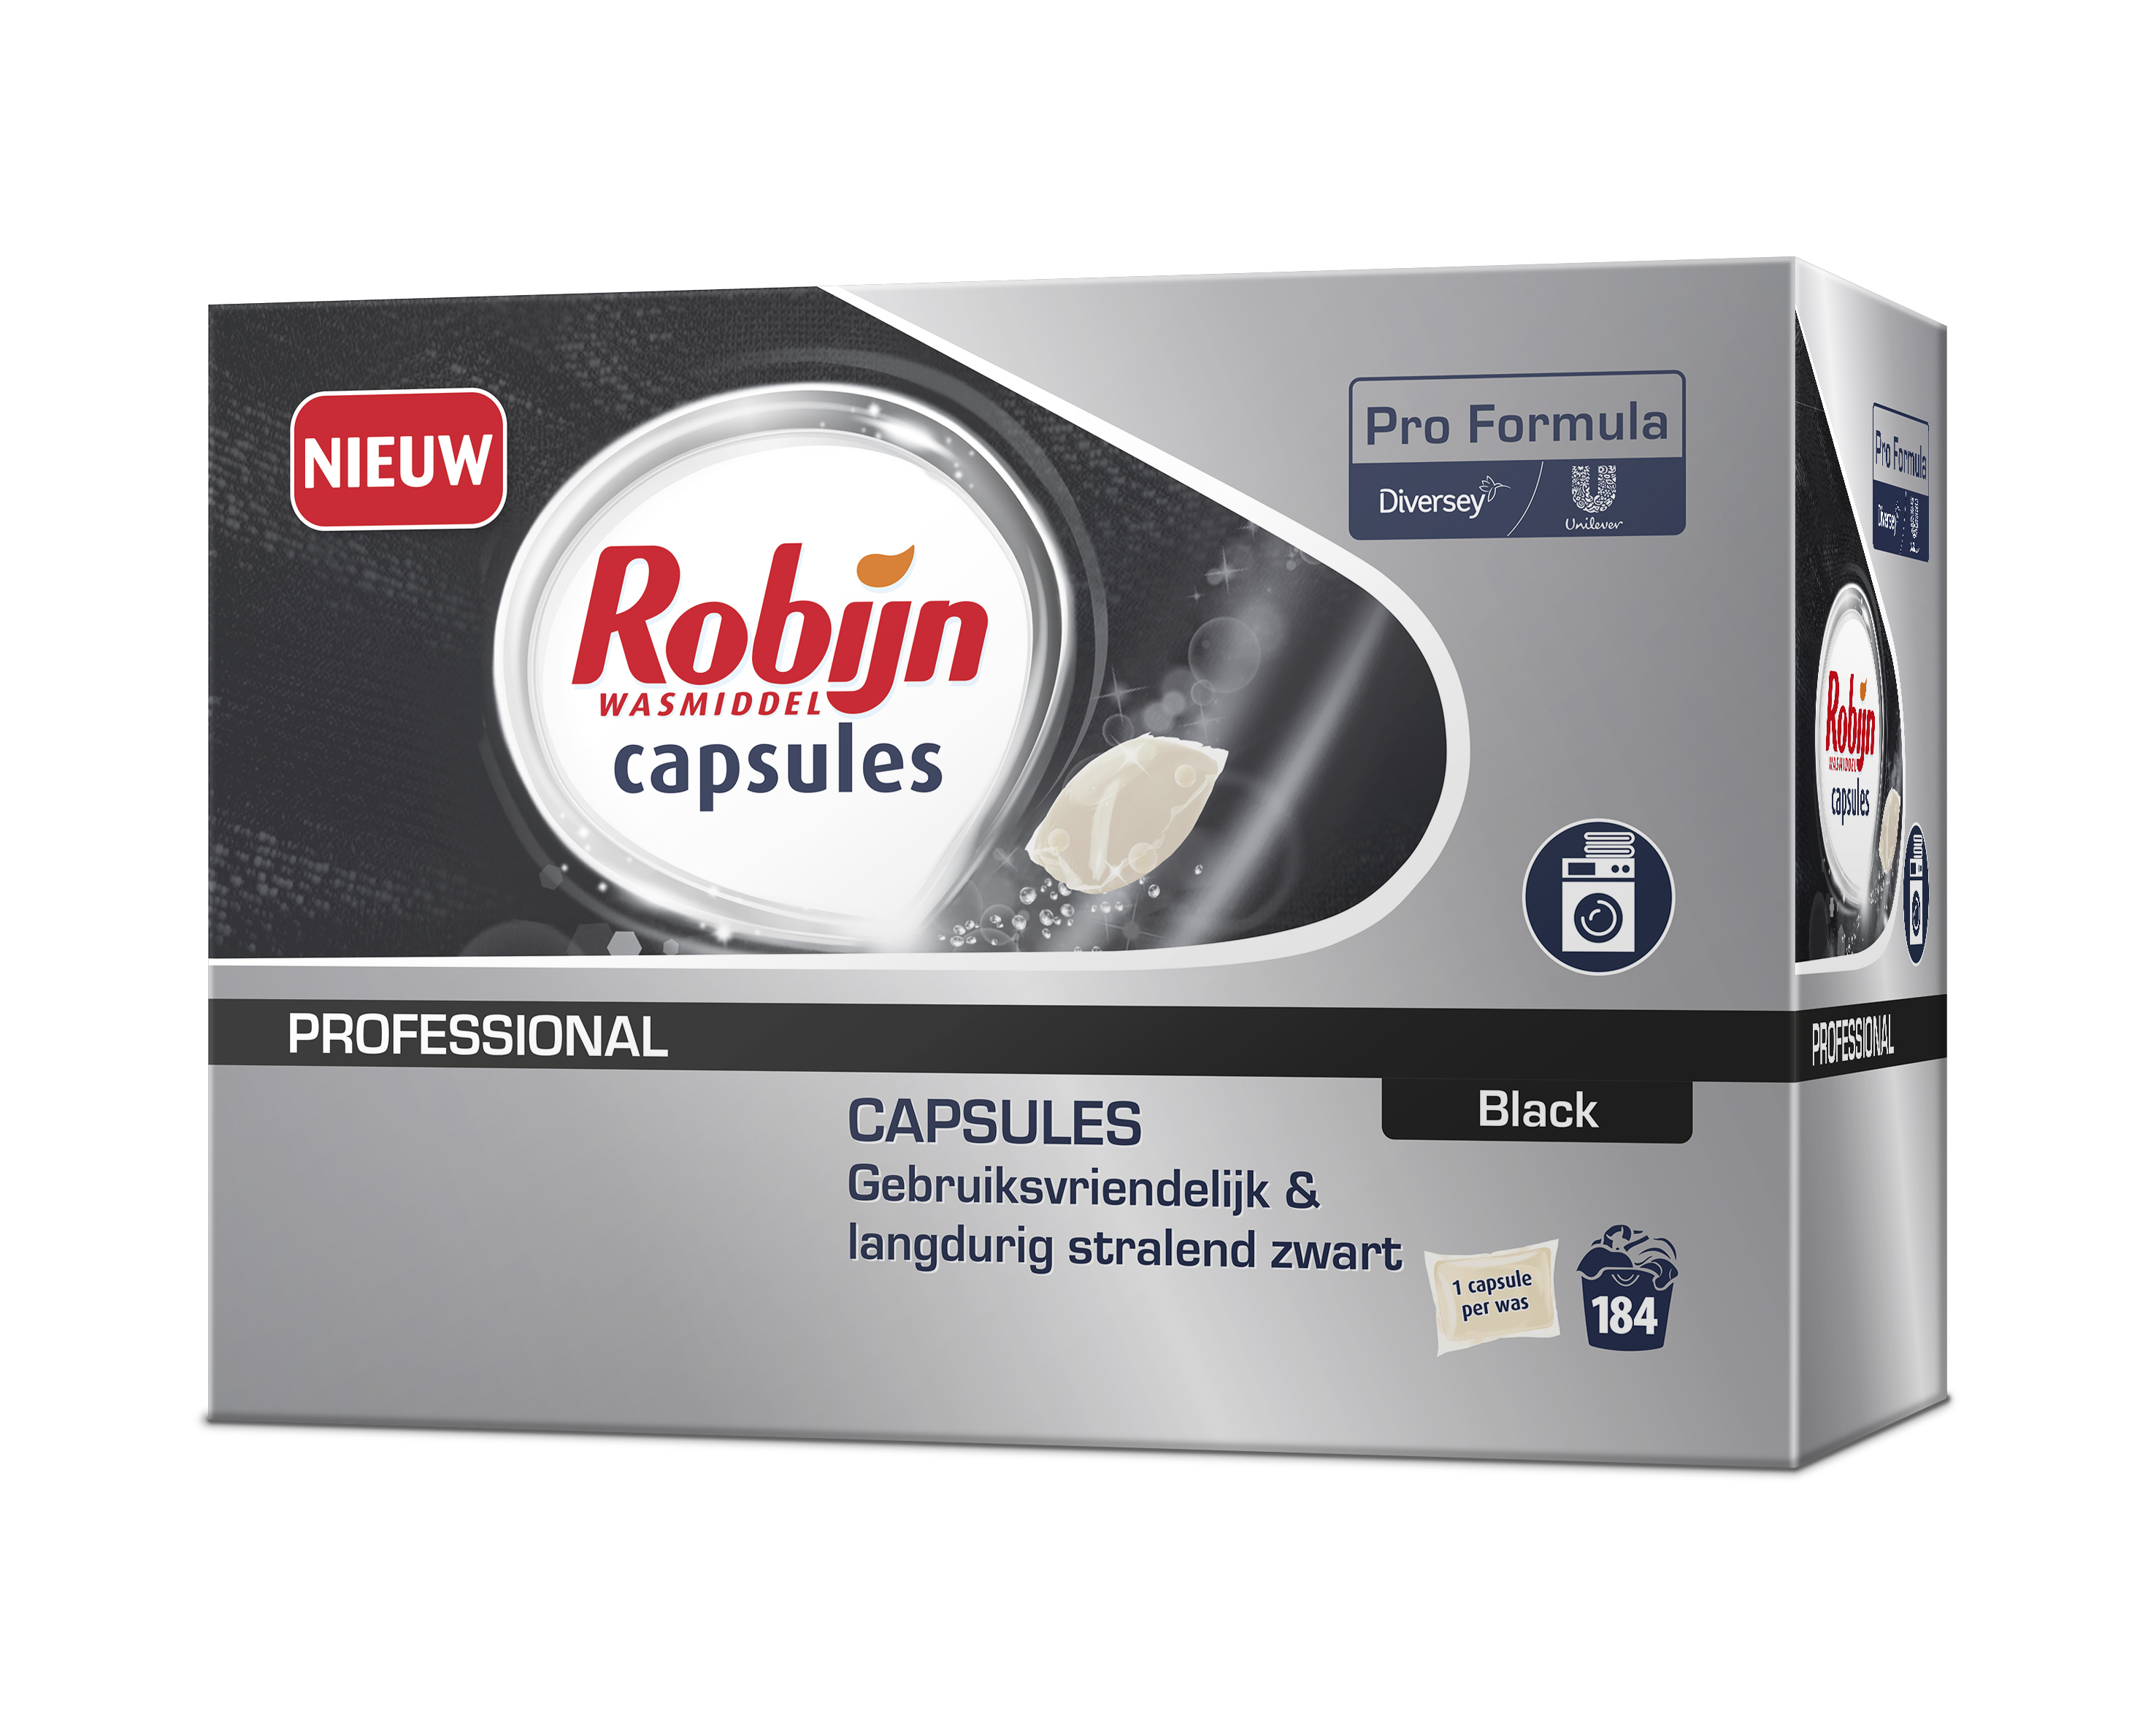 Robijn Pro Formula Wasmiddel Capsules Black / 46 capsules